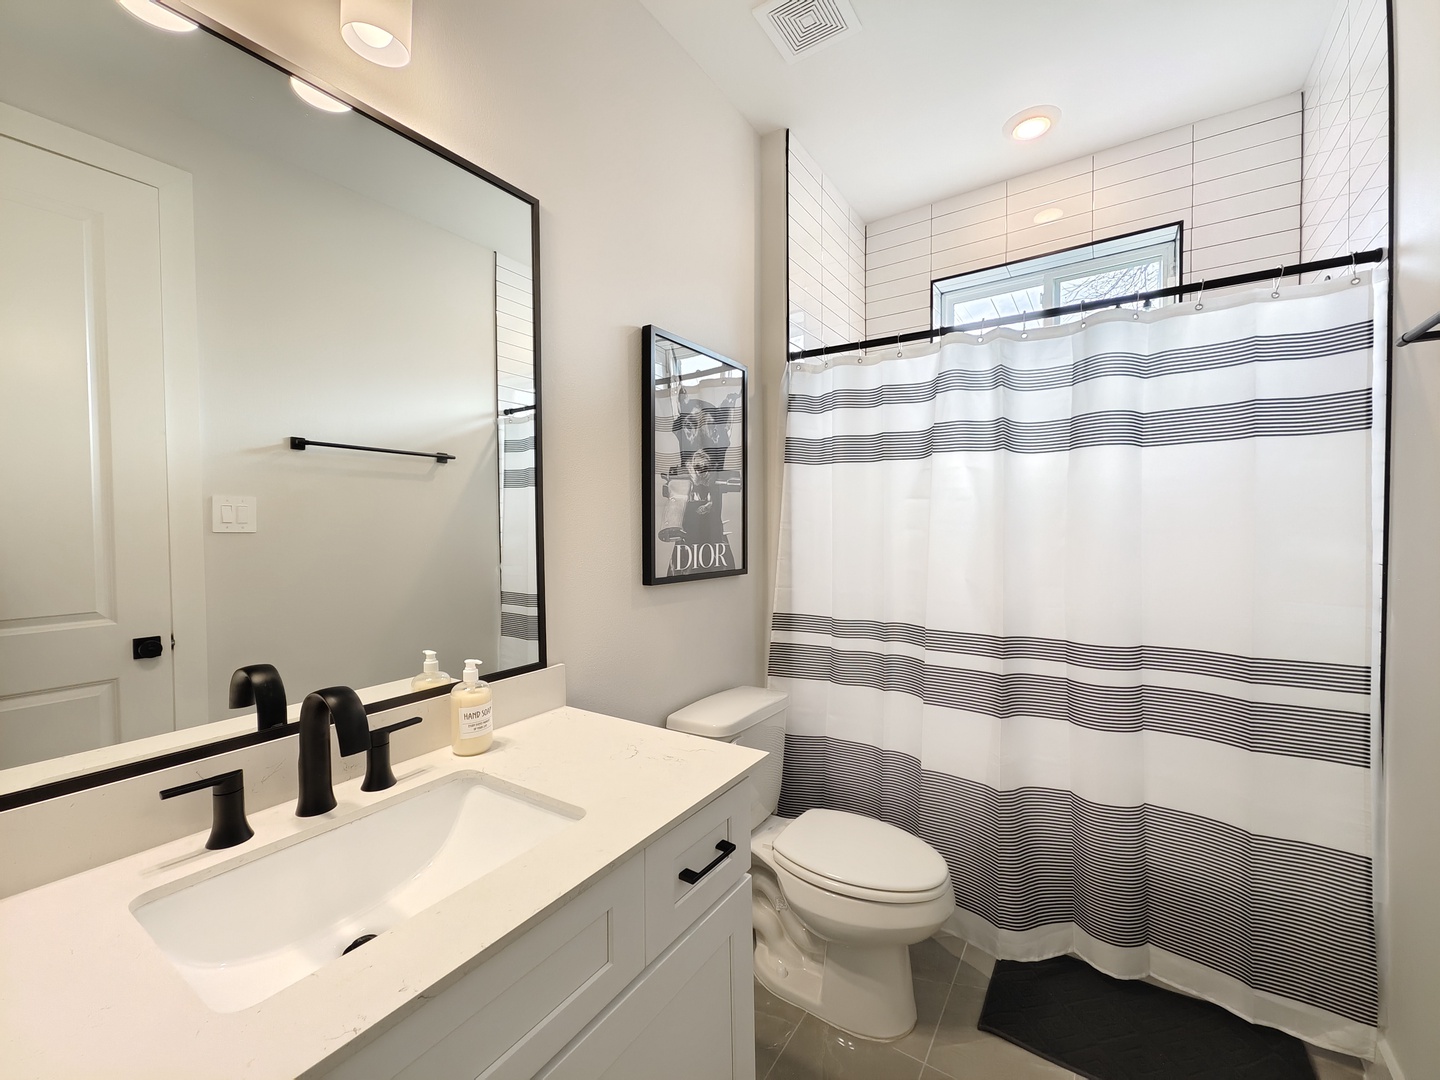 A single vanity & shower/tub combo await in the 1st floor ensuite